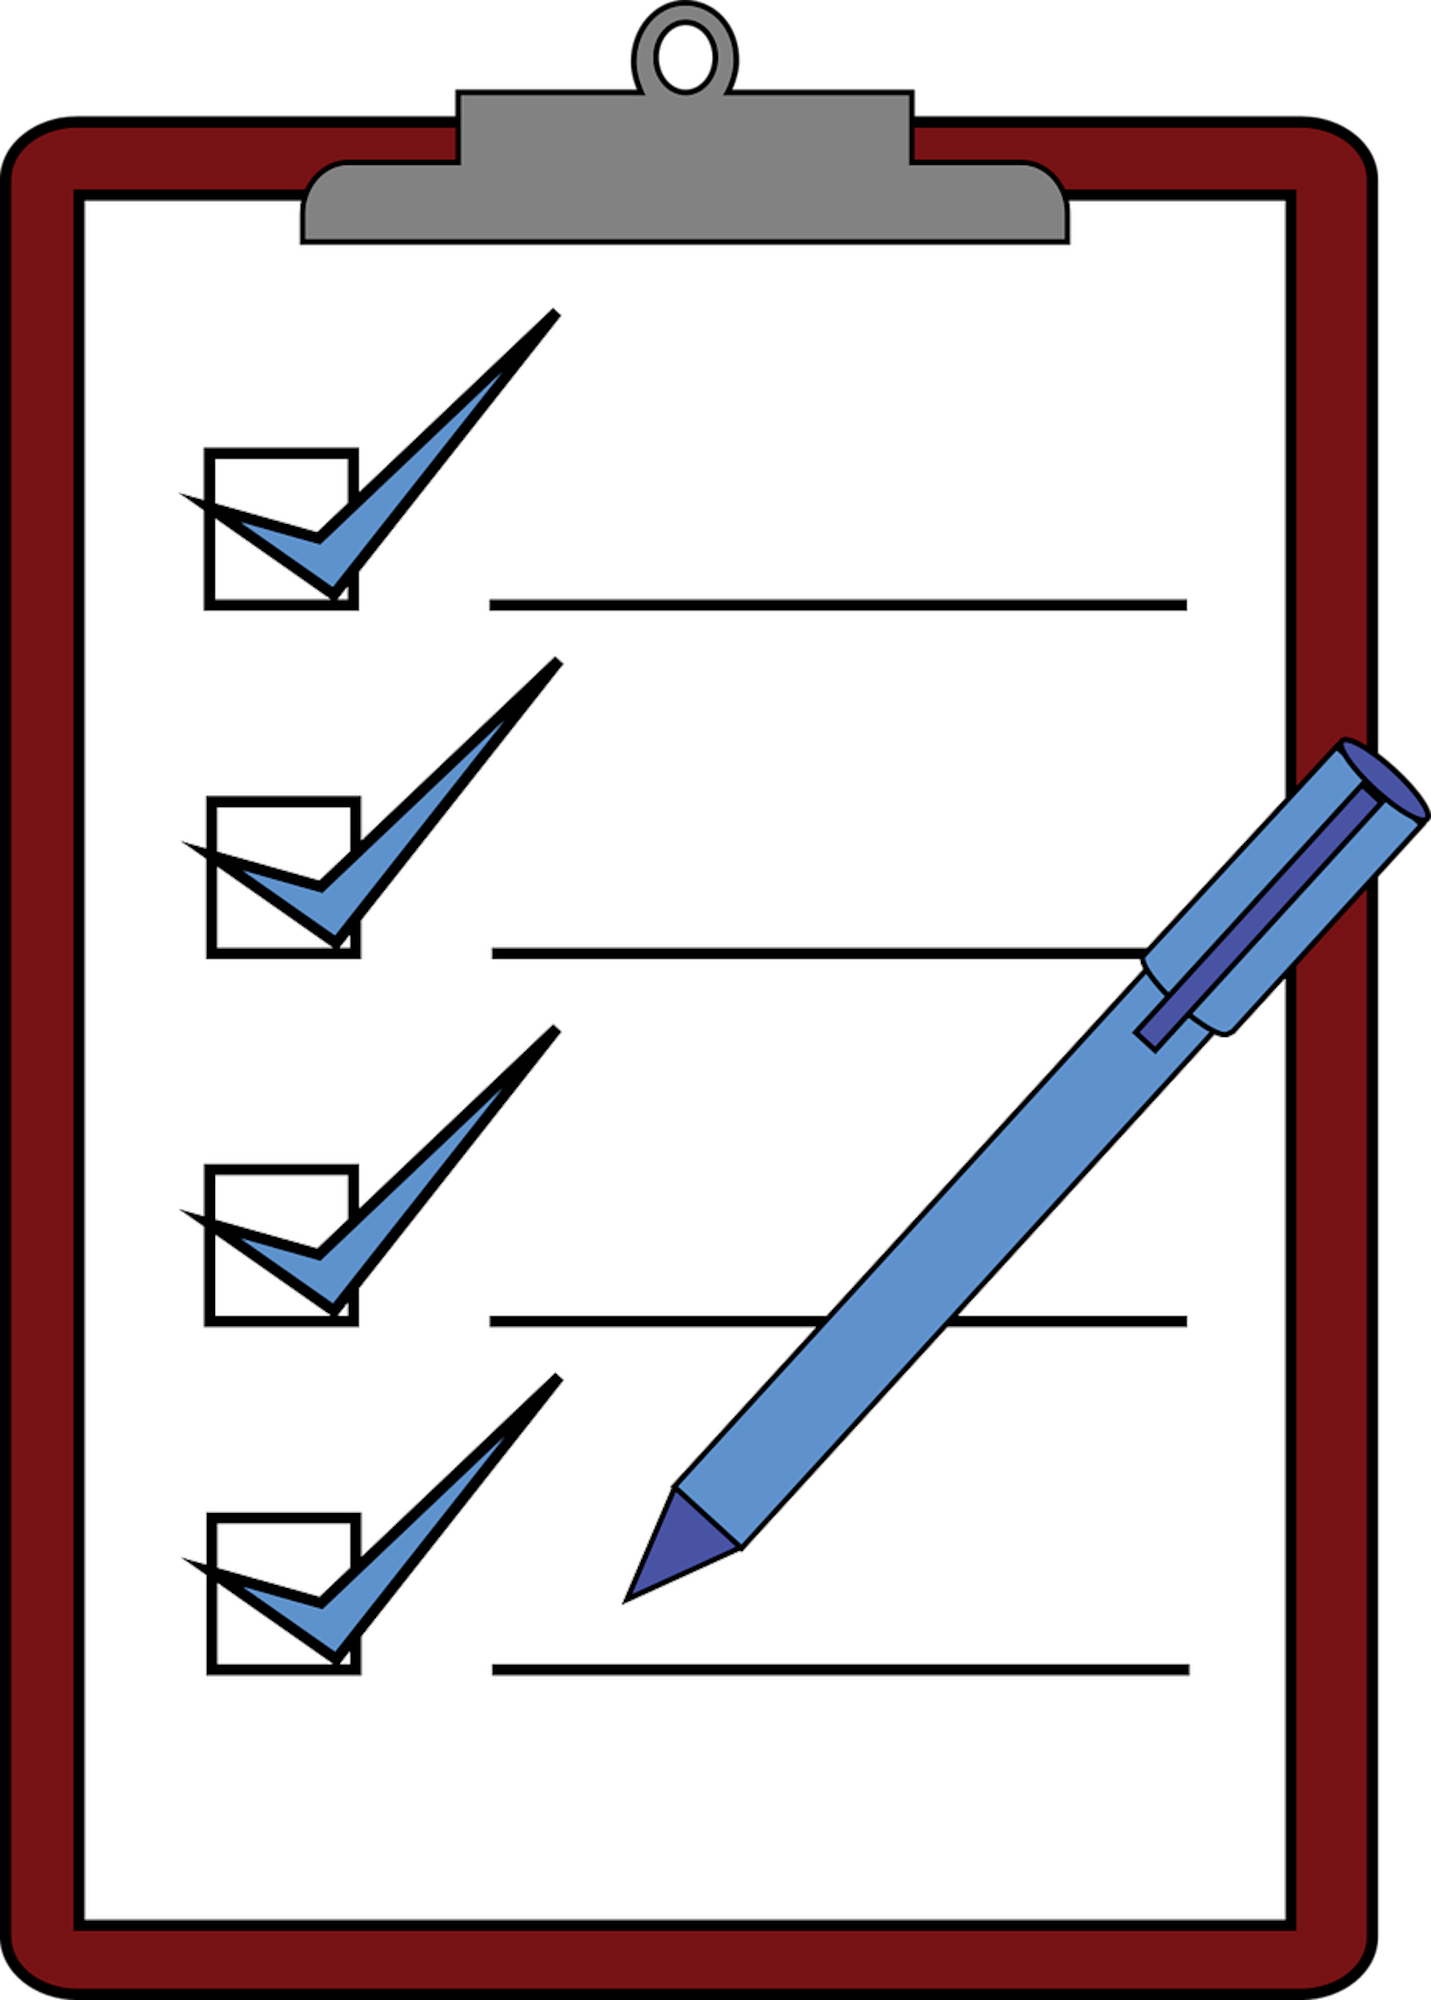 Checklist Clipboard